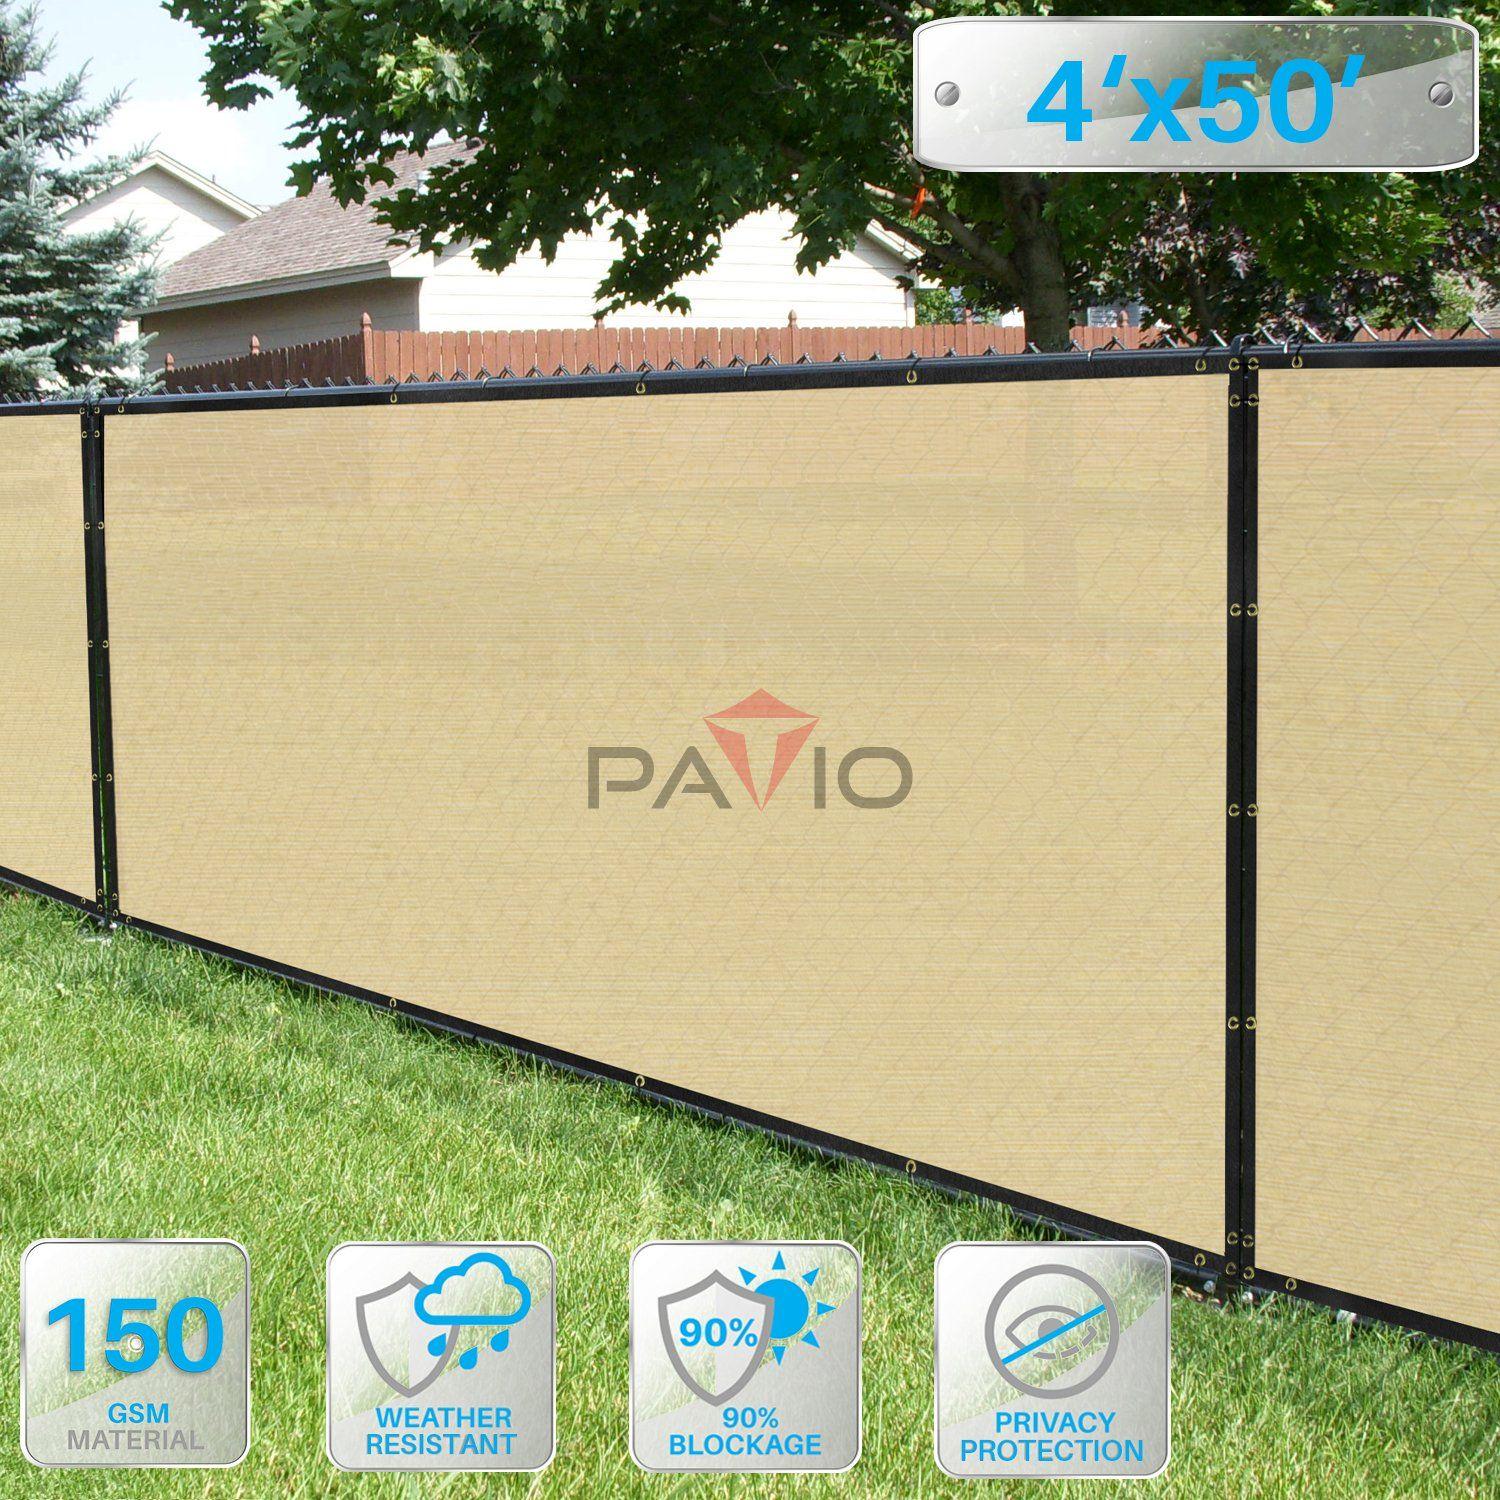 Patio Paradise Logo - Amazon.com : Patio Paradise 4' x 50' Tan Beige Fence Privacy Screen ...